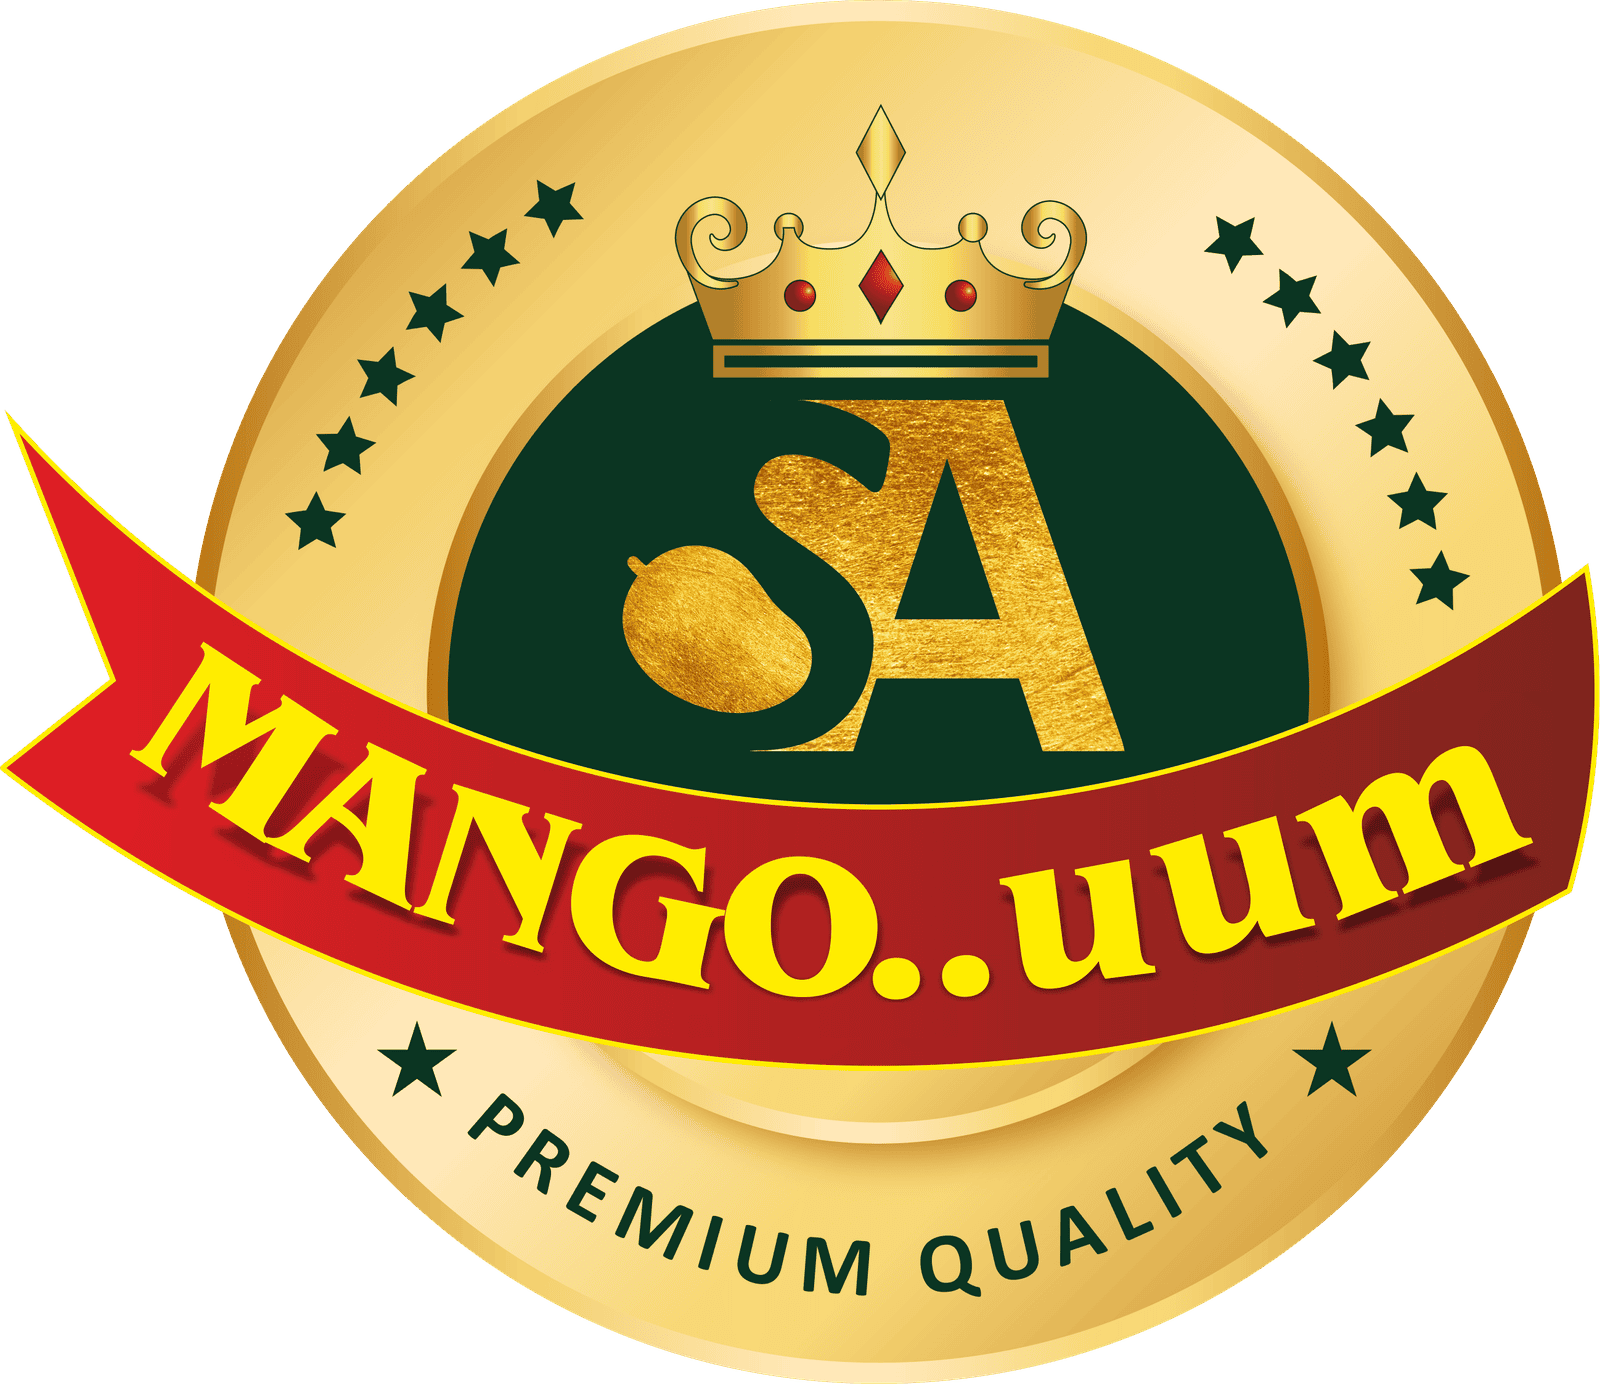 Shreevali Agro Premium Alphonso Mangoes Mango..uum Mangouum Mangoyum Devagd Ratnagiri